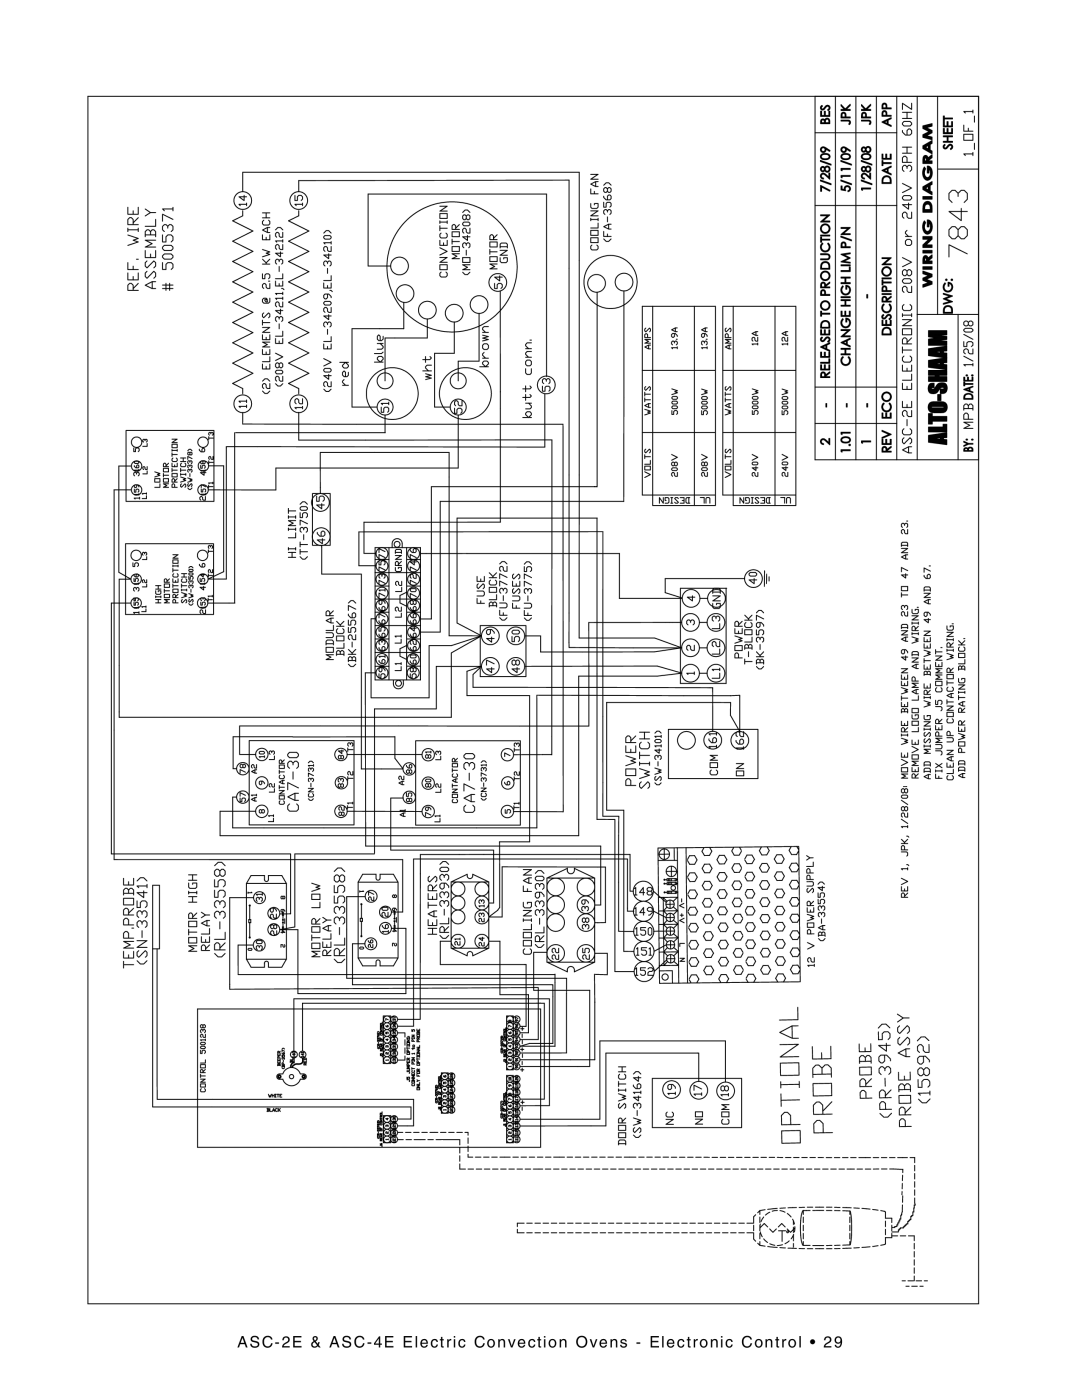 Alto-Shaam manual ASC-2E & ASC-4E Electric Convection Ovens - Electronic Control 